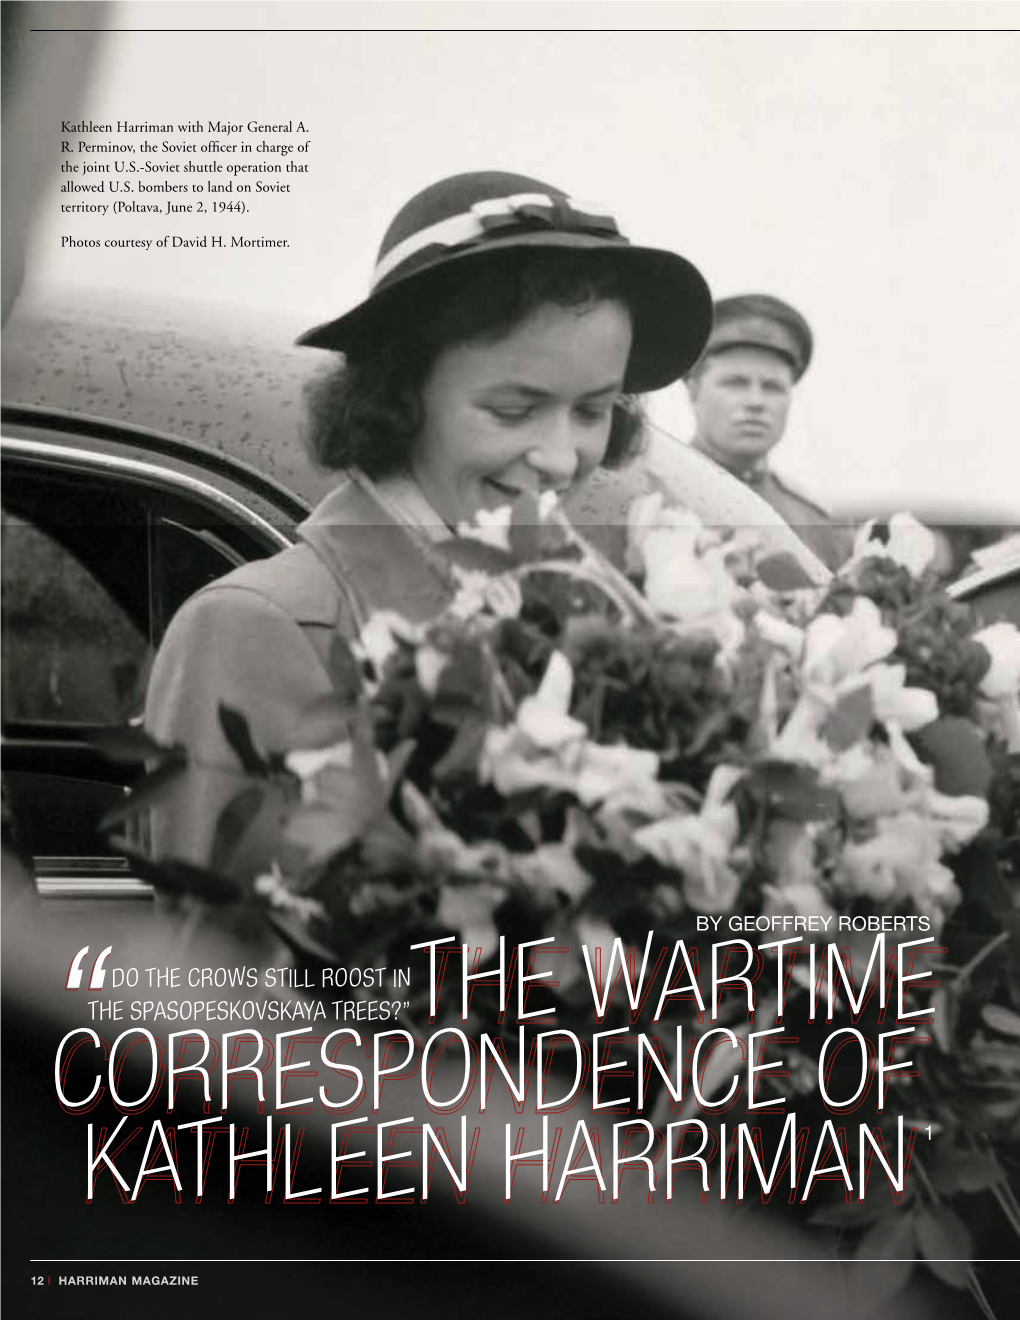 Kathleen Harriman Correspondence of the Wartime